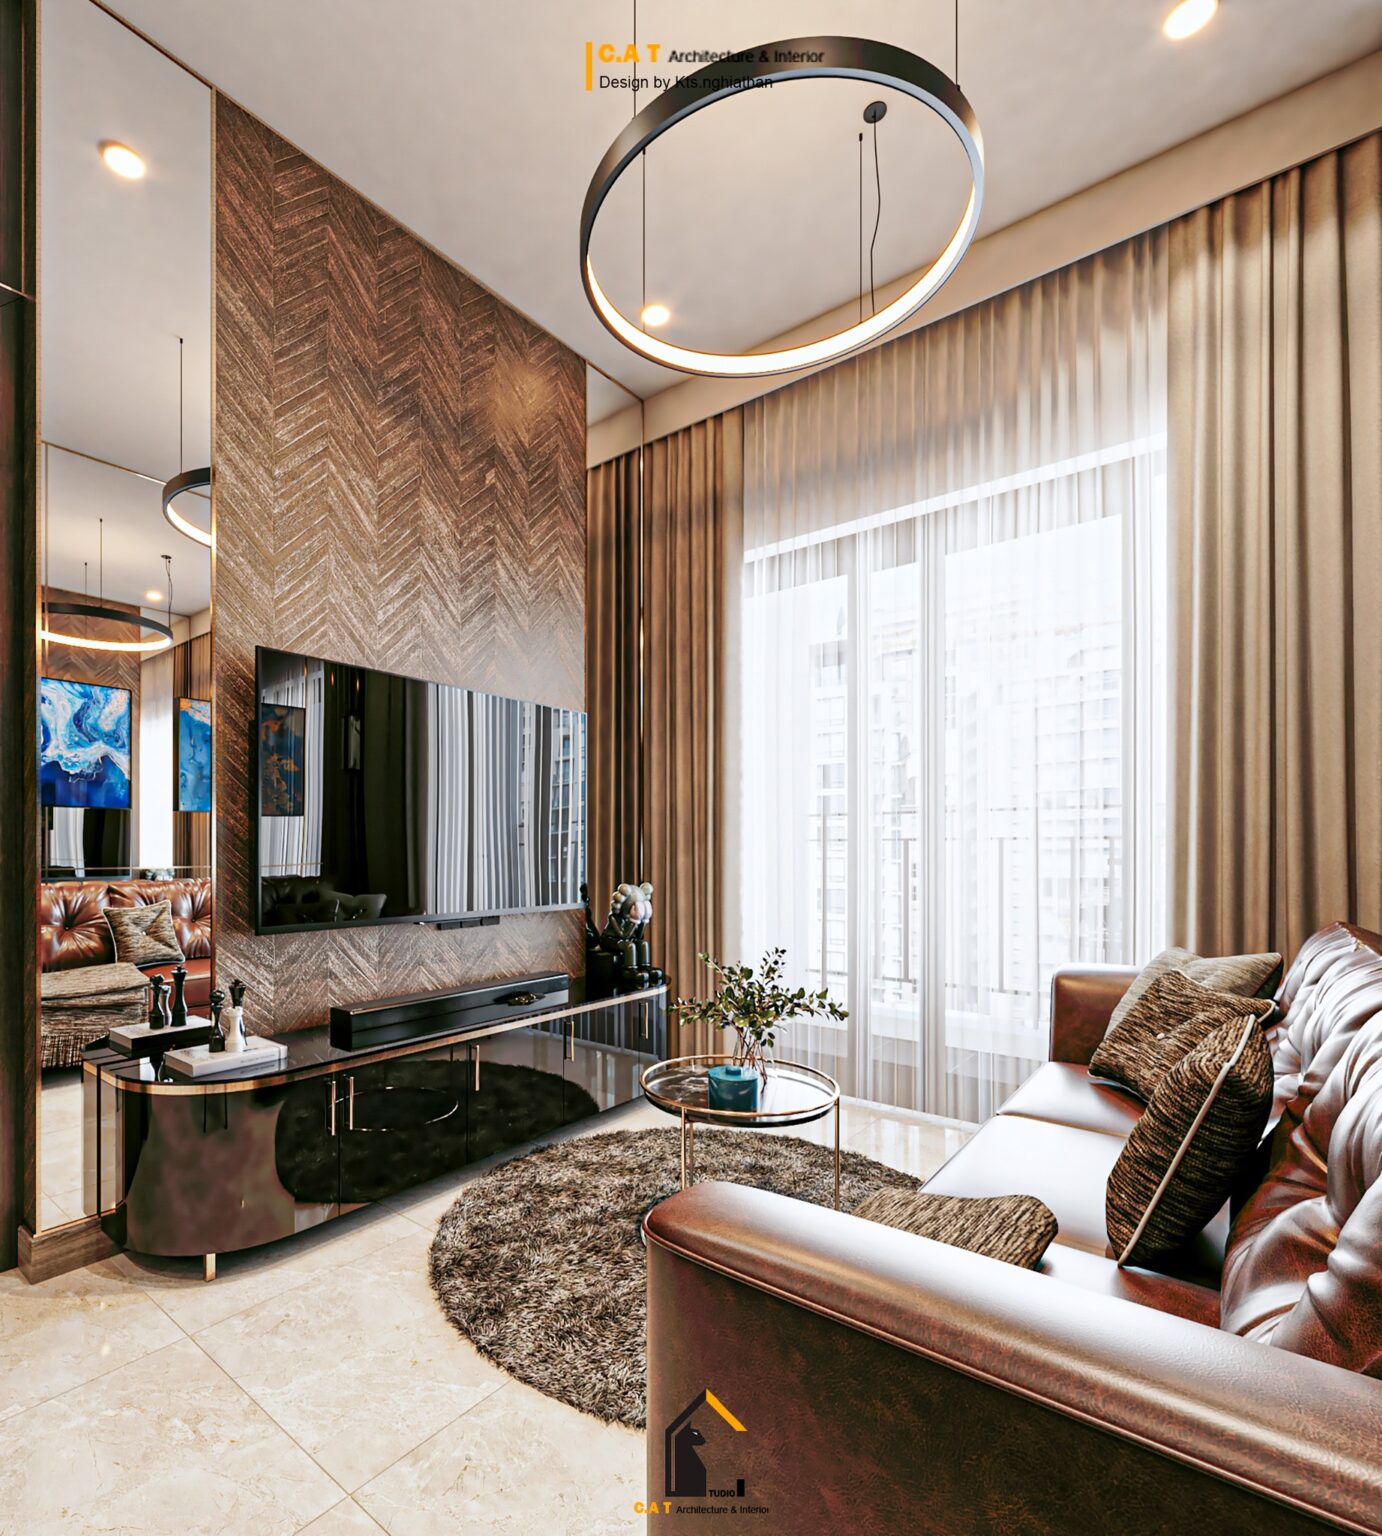 5879. Sketchup Apartment Interior Model Download By Kts Nghia Than